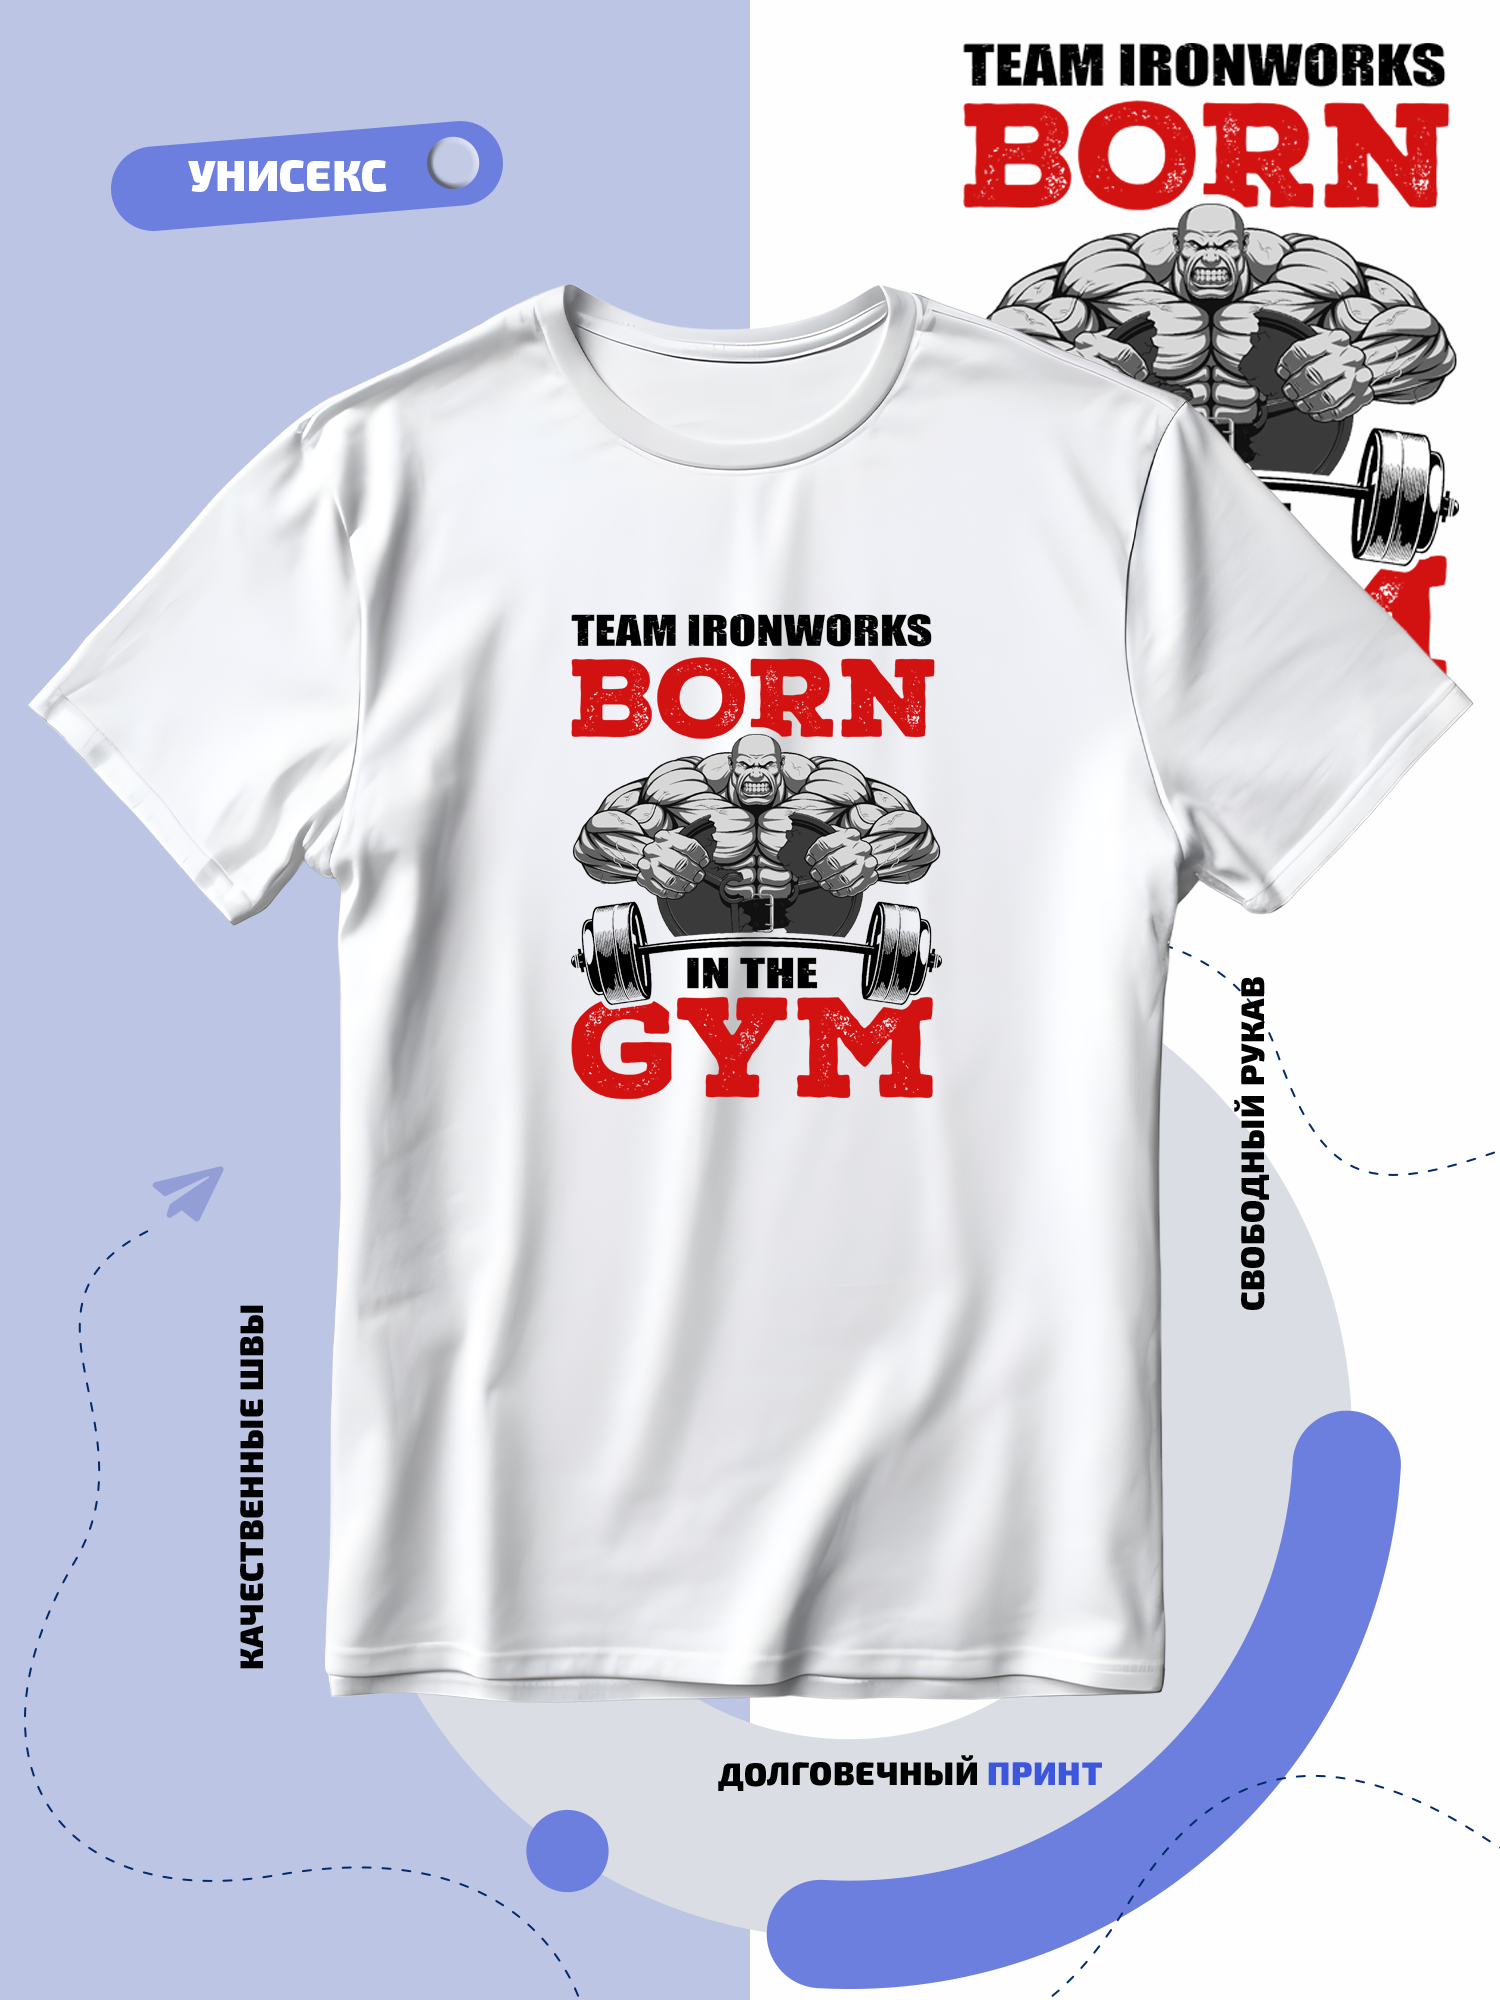 Футболка SMAIL-P team ironworks born in the gym с мощным качком